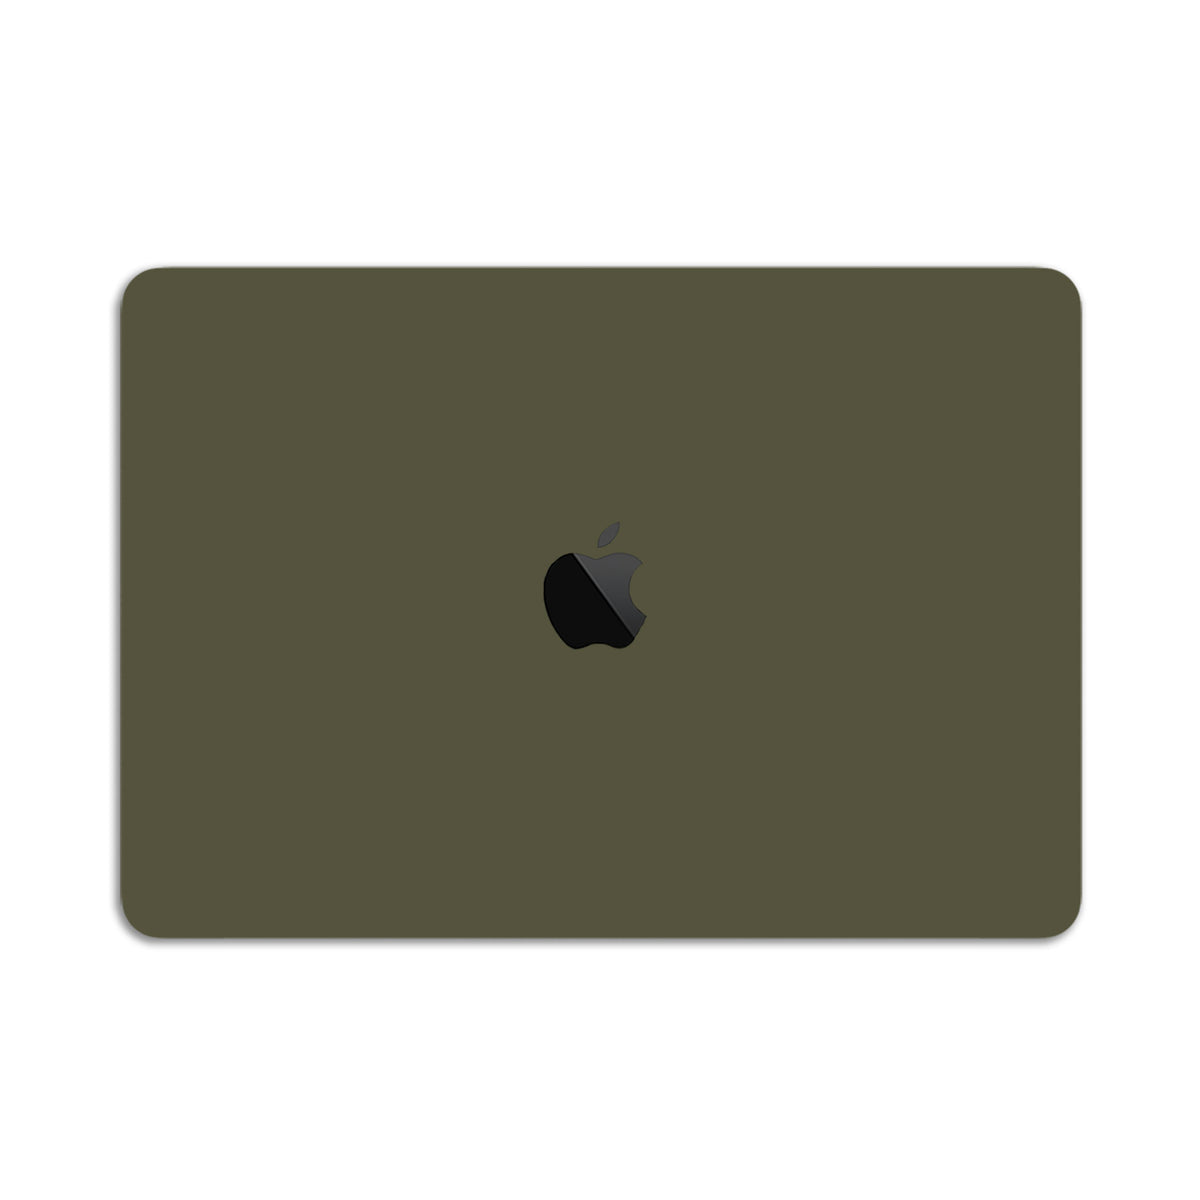 MacBook Cases & MacBook Skins - Uniqfind